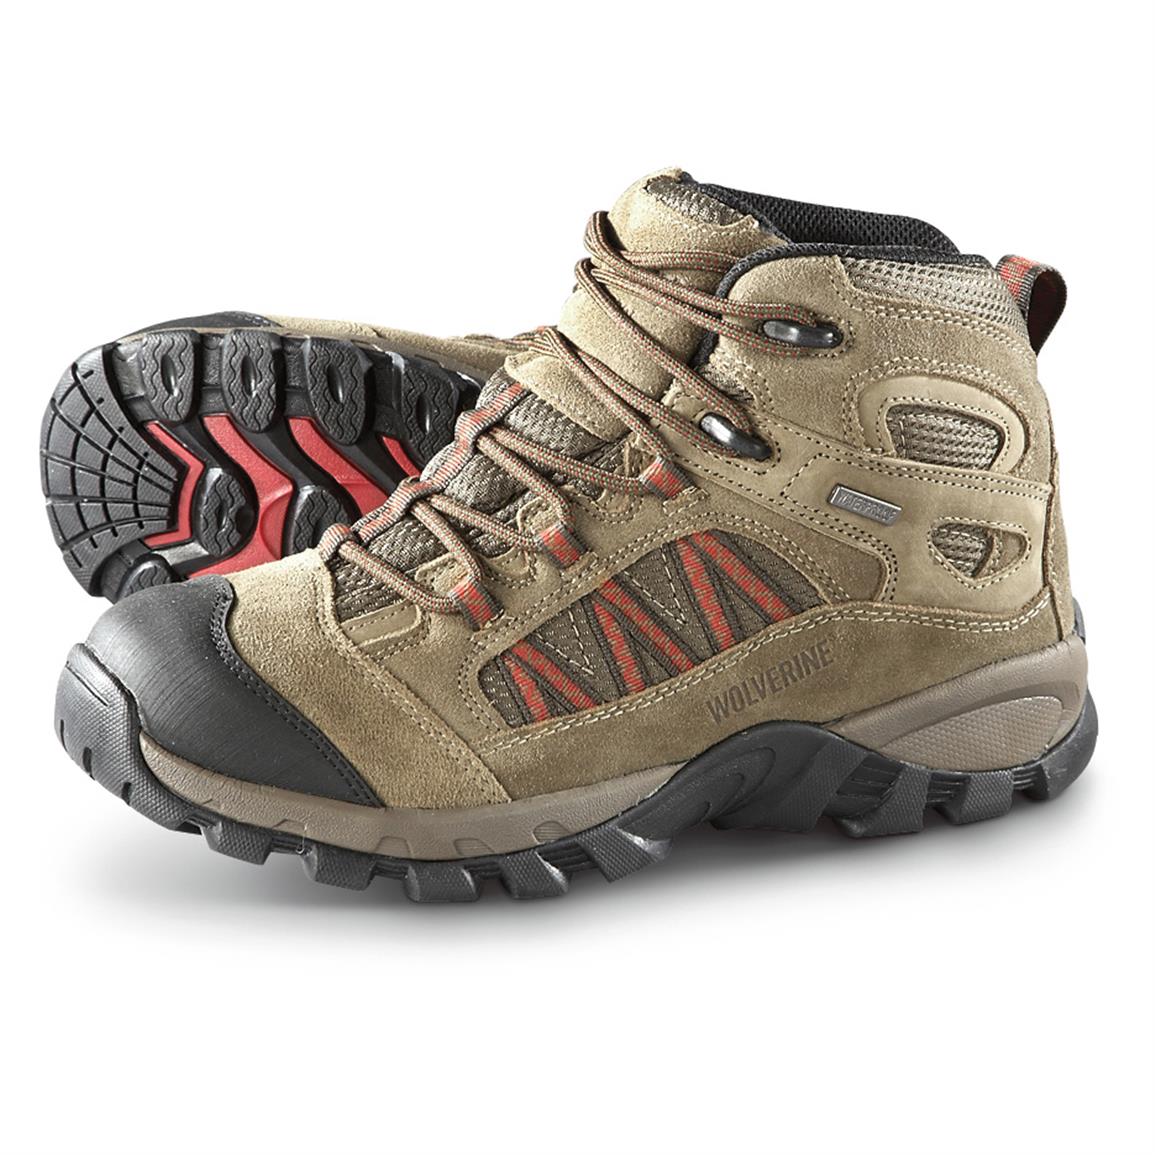 Men's Wolverine Blackledge Hiking Boots, Brindle - 610426 ...